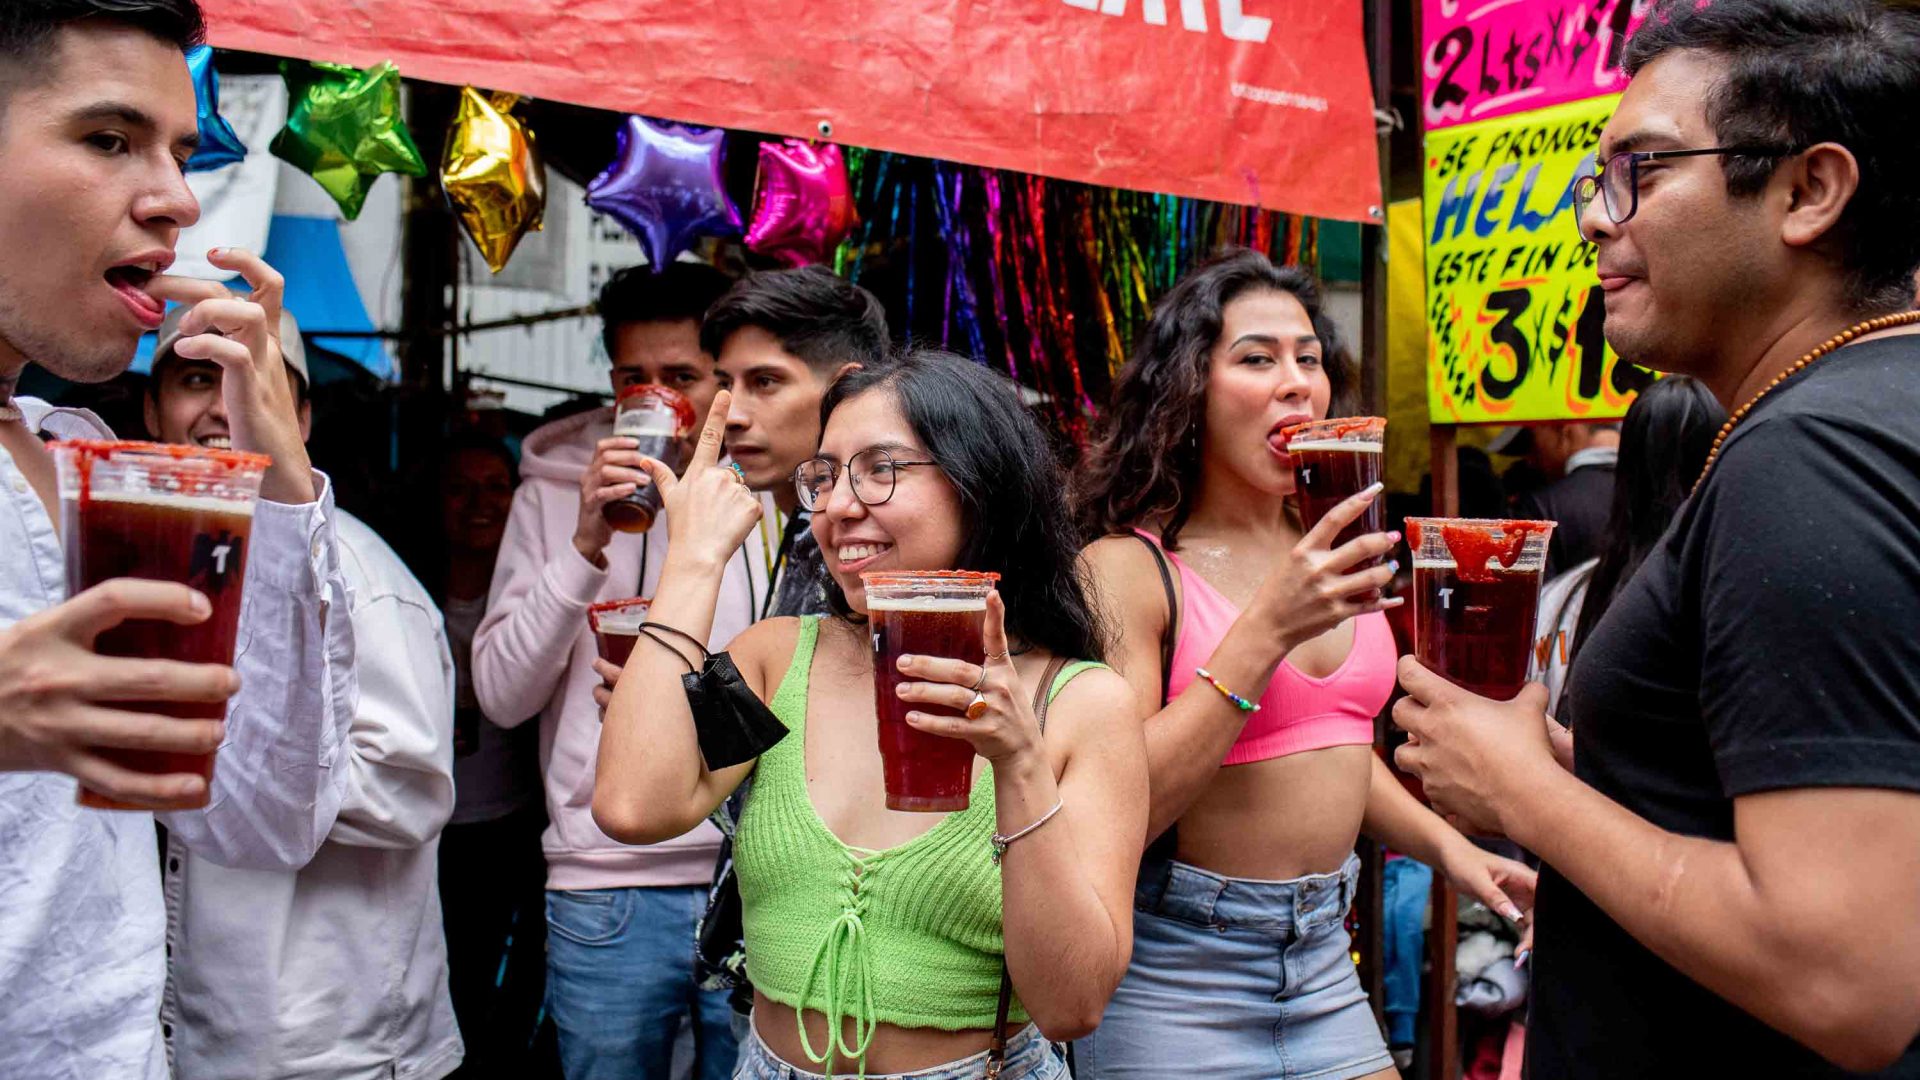 Partygoers drink micheladas under a red sign.